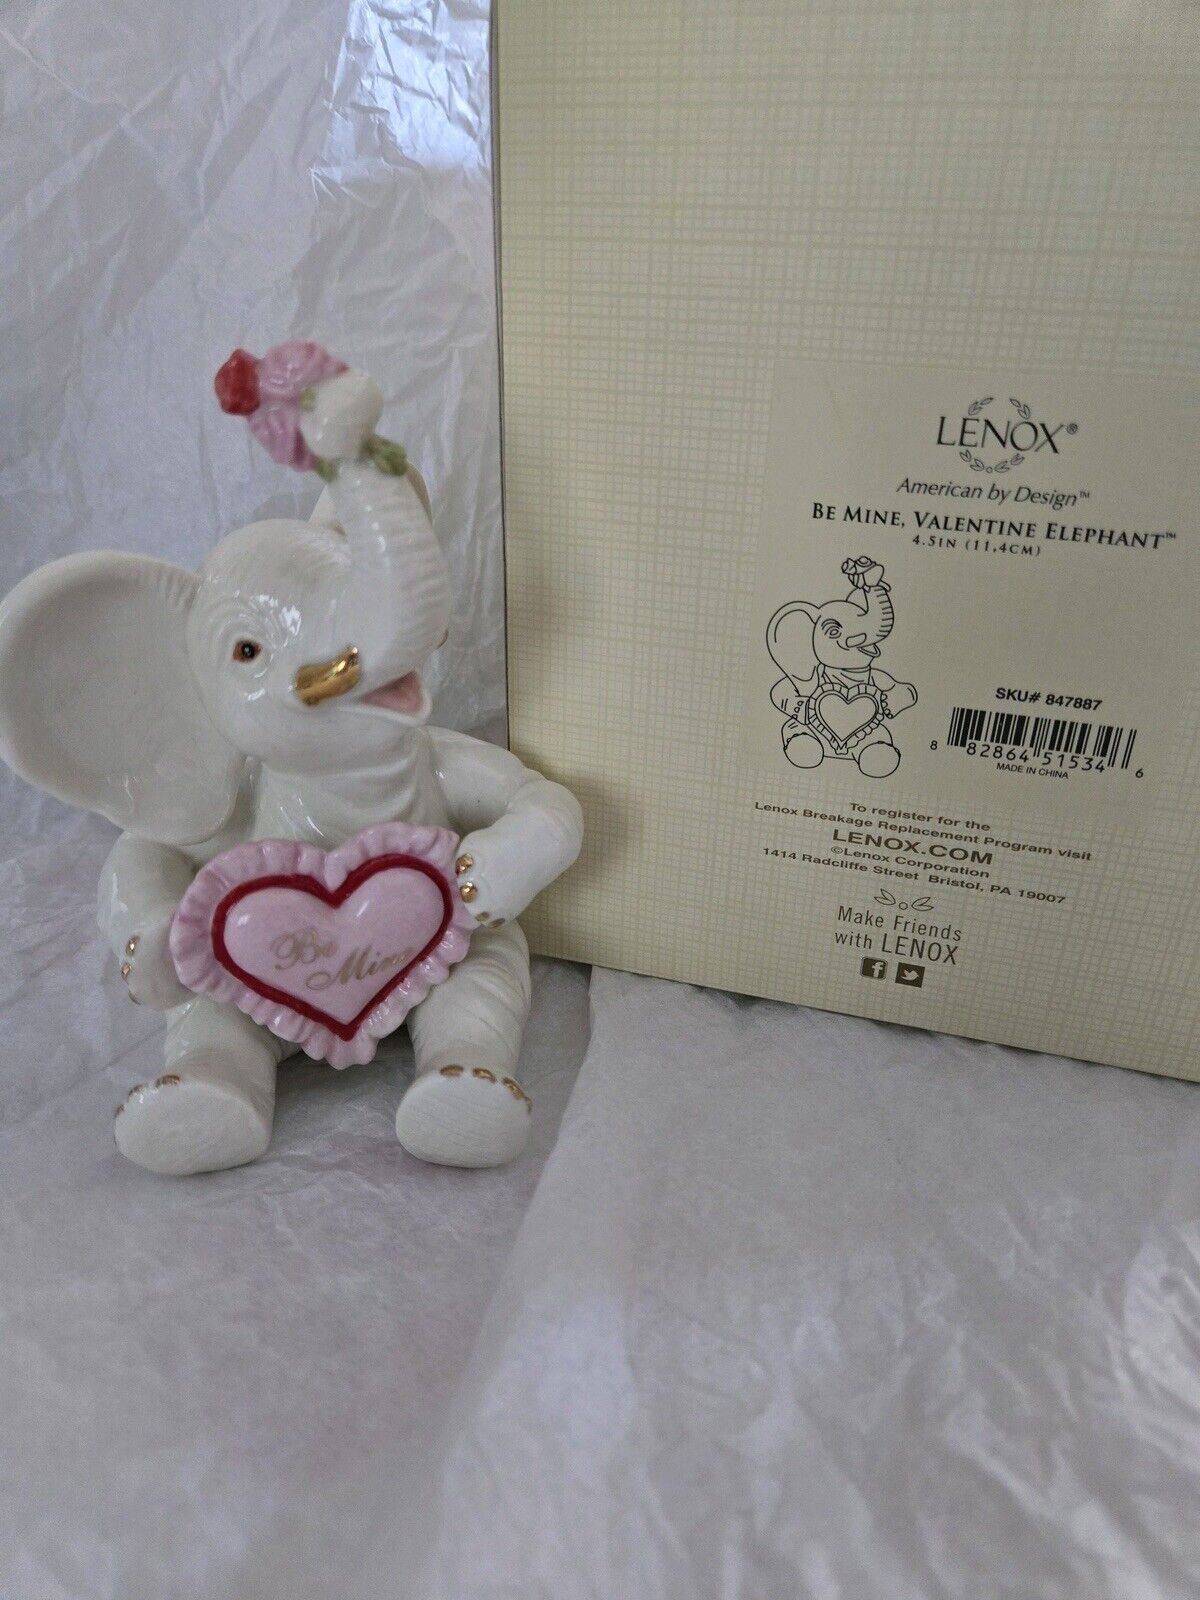 Lenox Be Mine, Valentine Elephant. SKU 847887